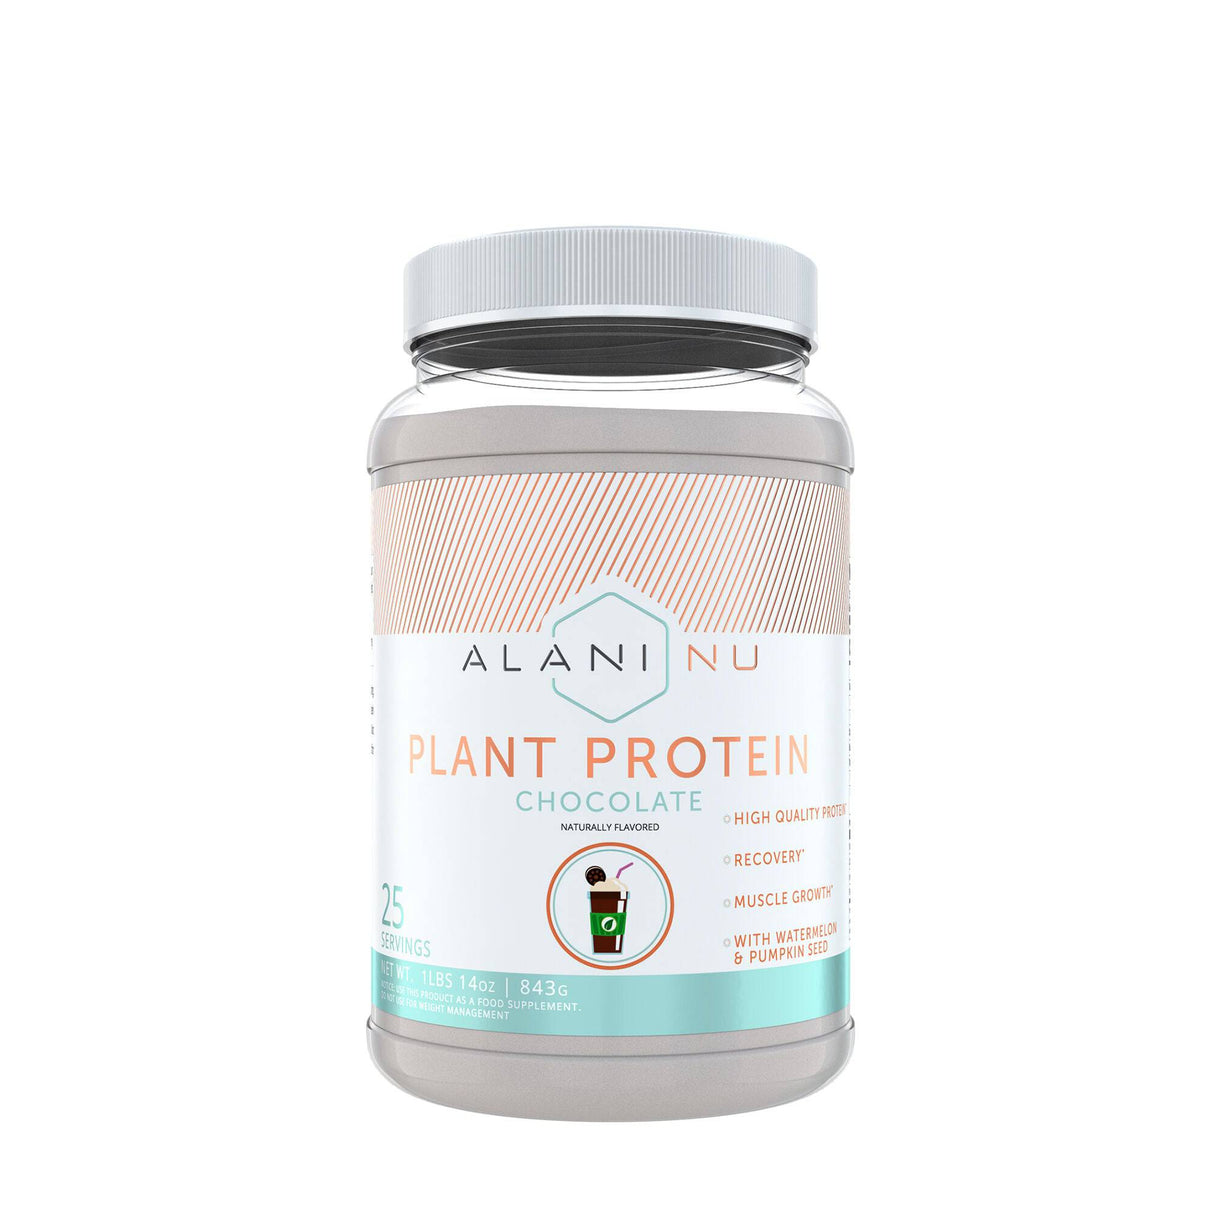 Plant Protein - Alani Nu - Prime Sports Nutrition